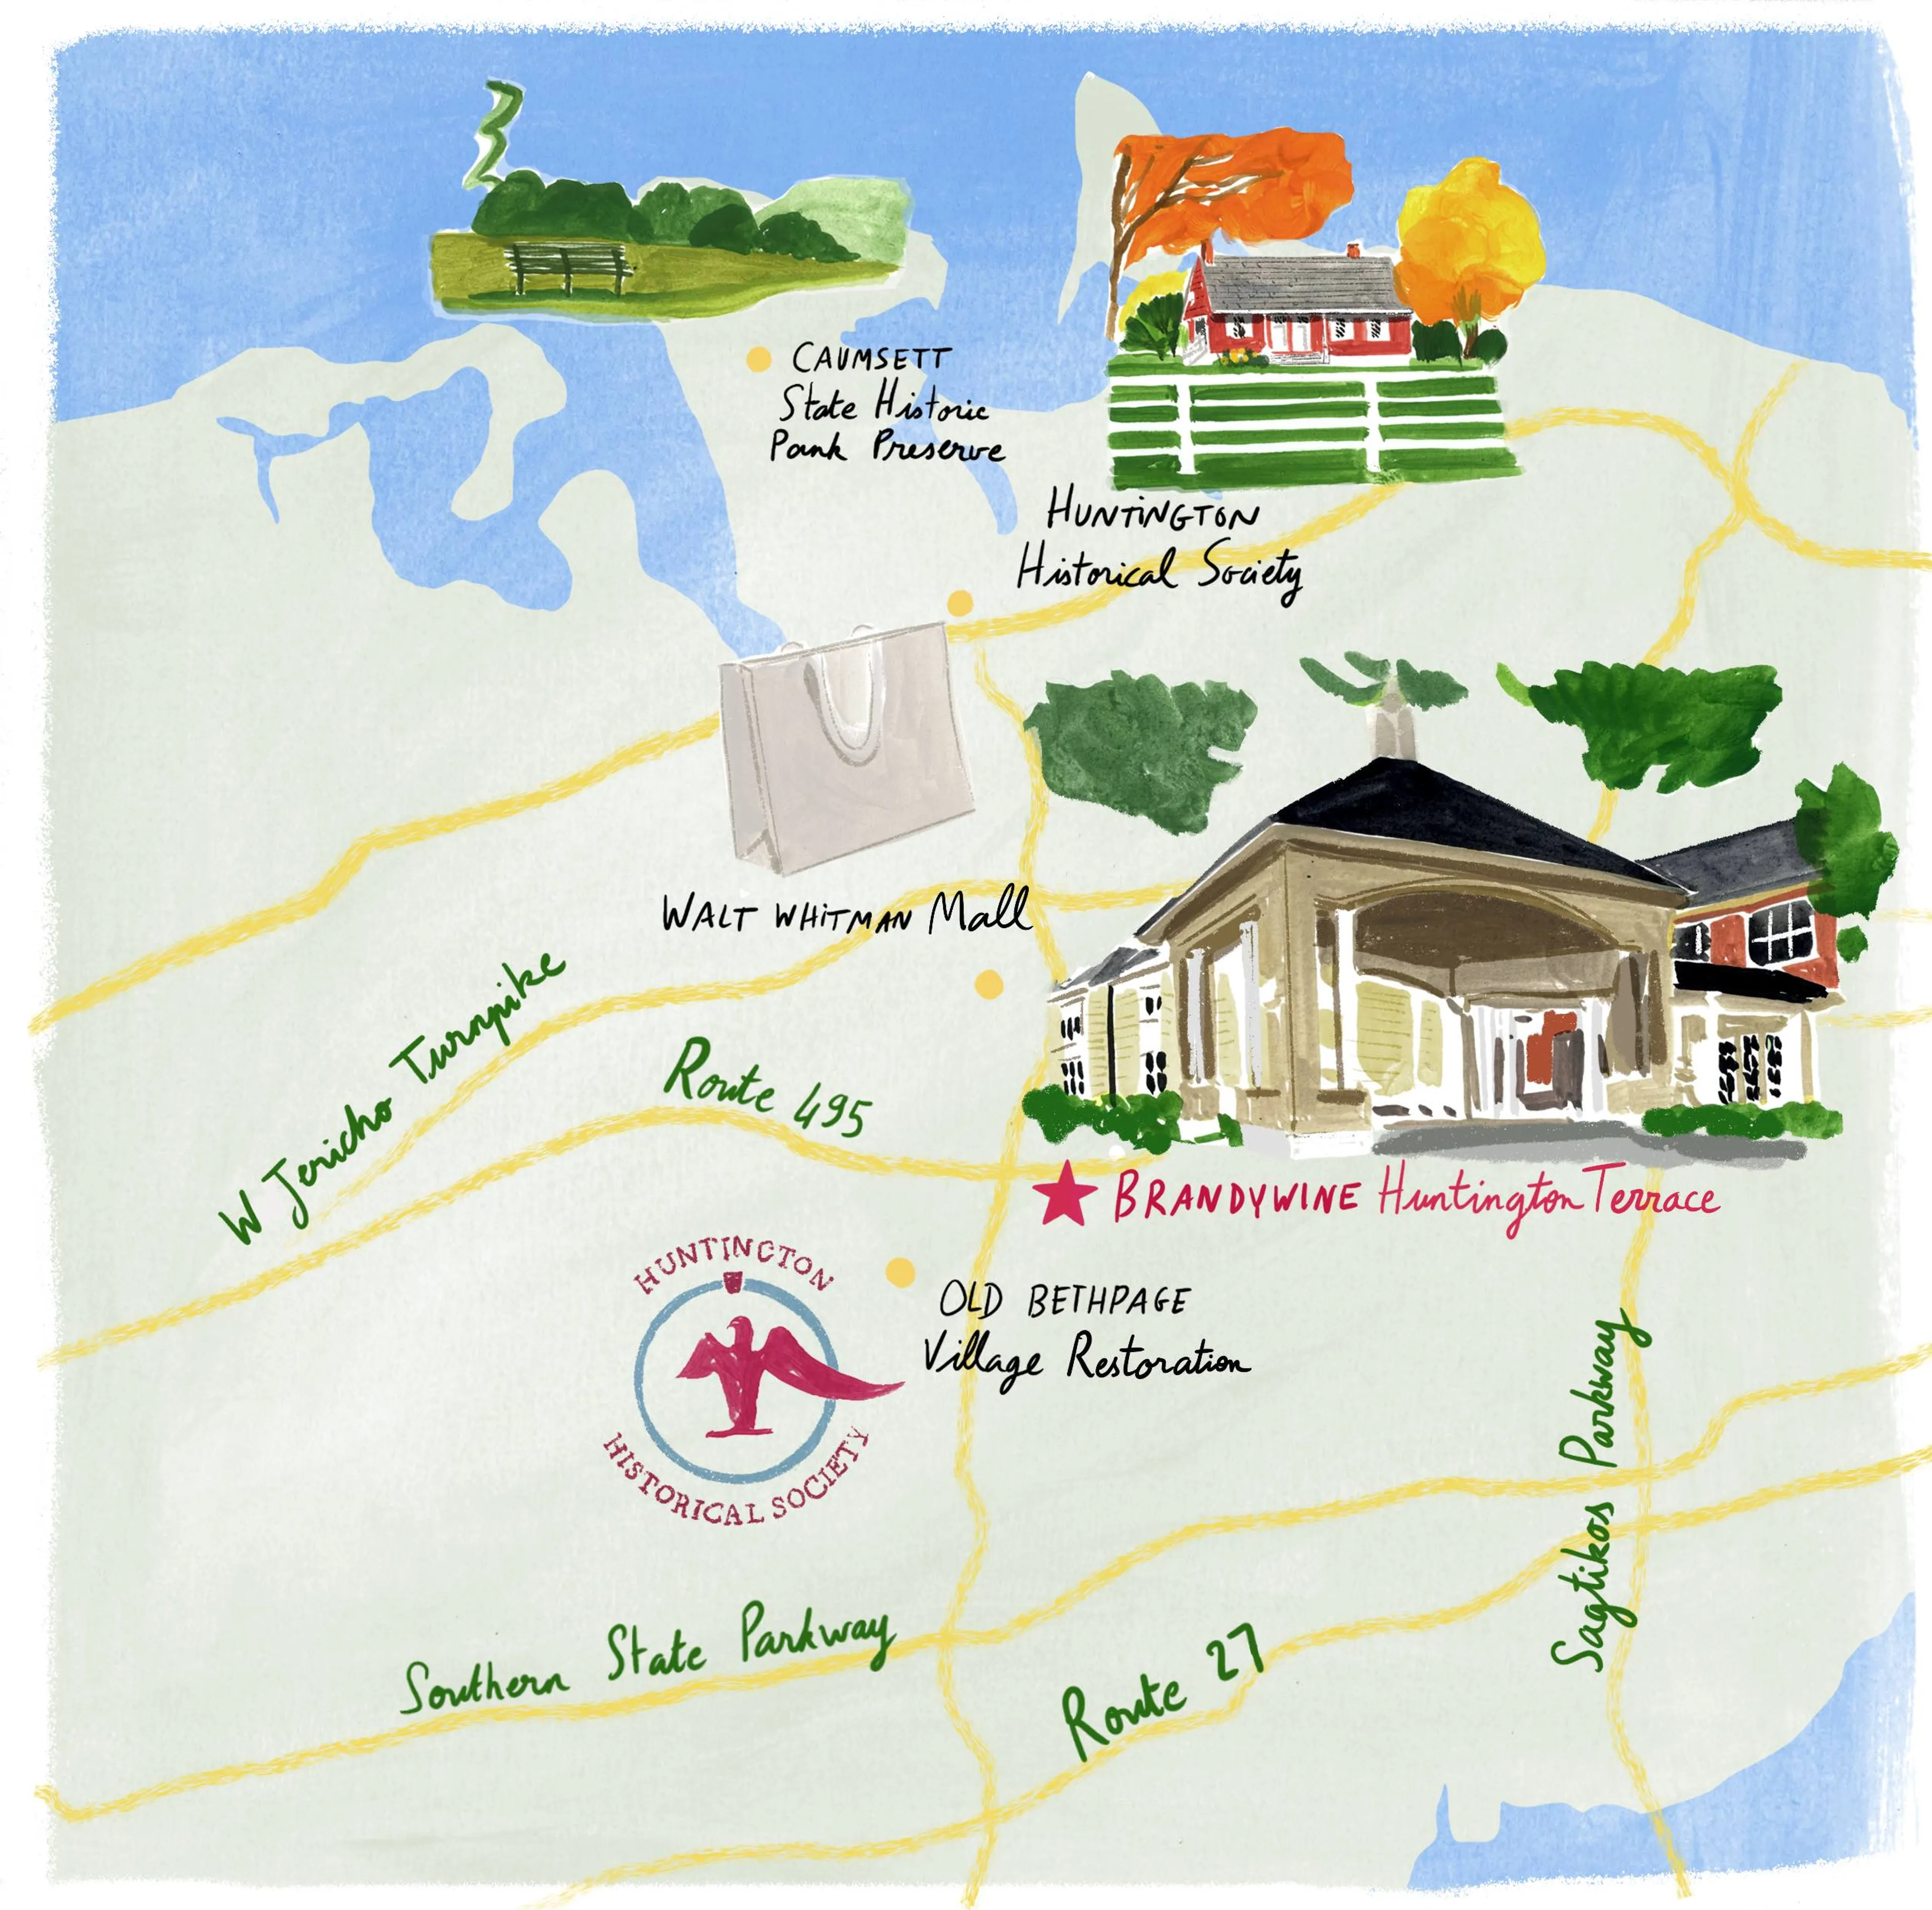 Hand-illustrated map of major roads and landmarks surrounding Brandywine Huntington Terrace in Huntington, NY